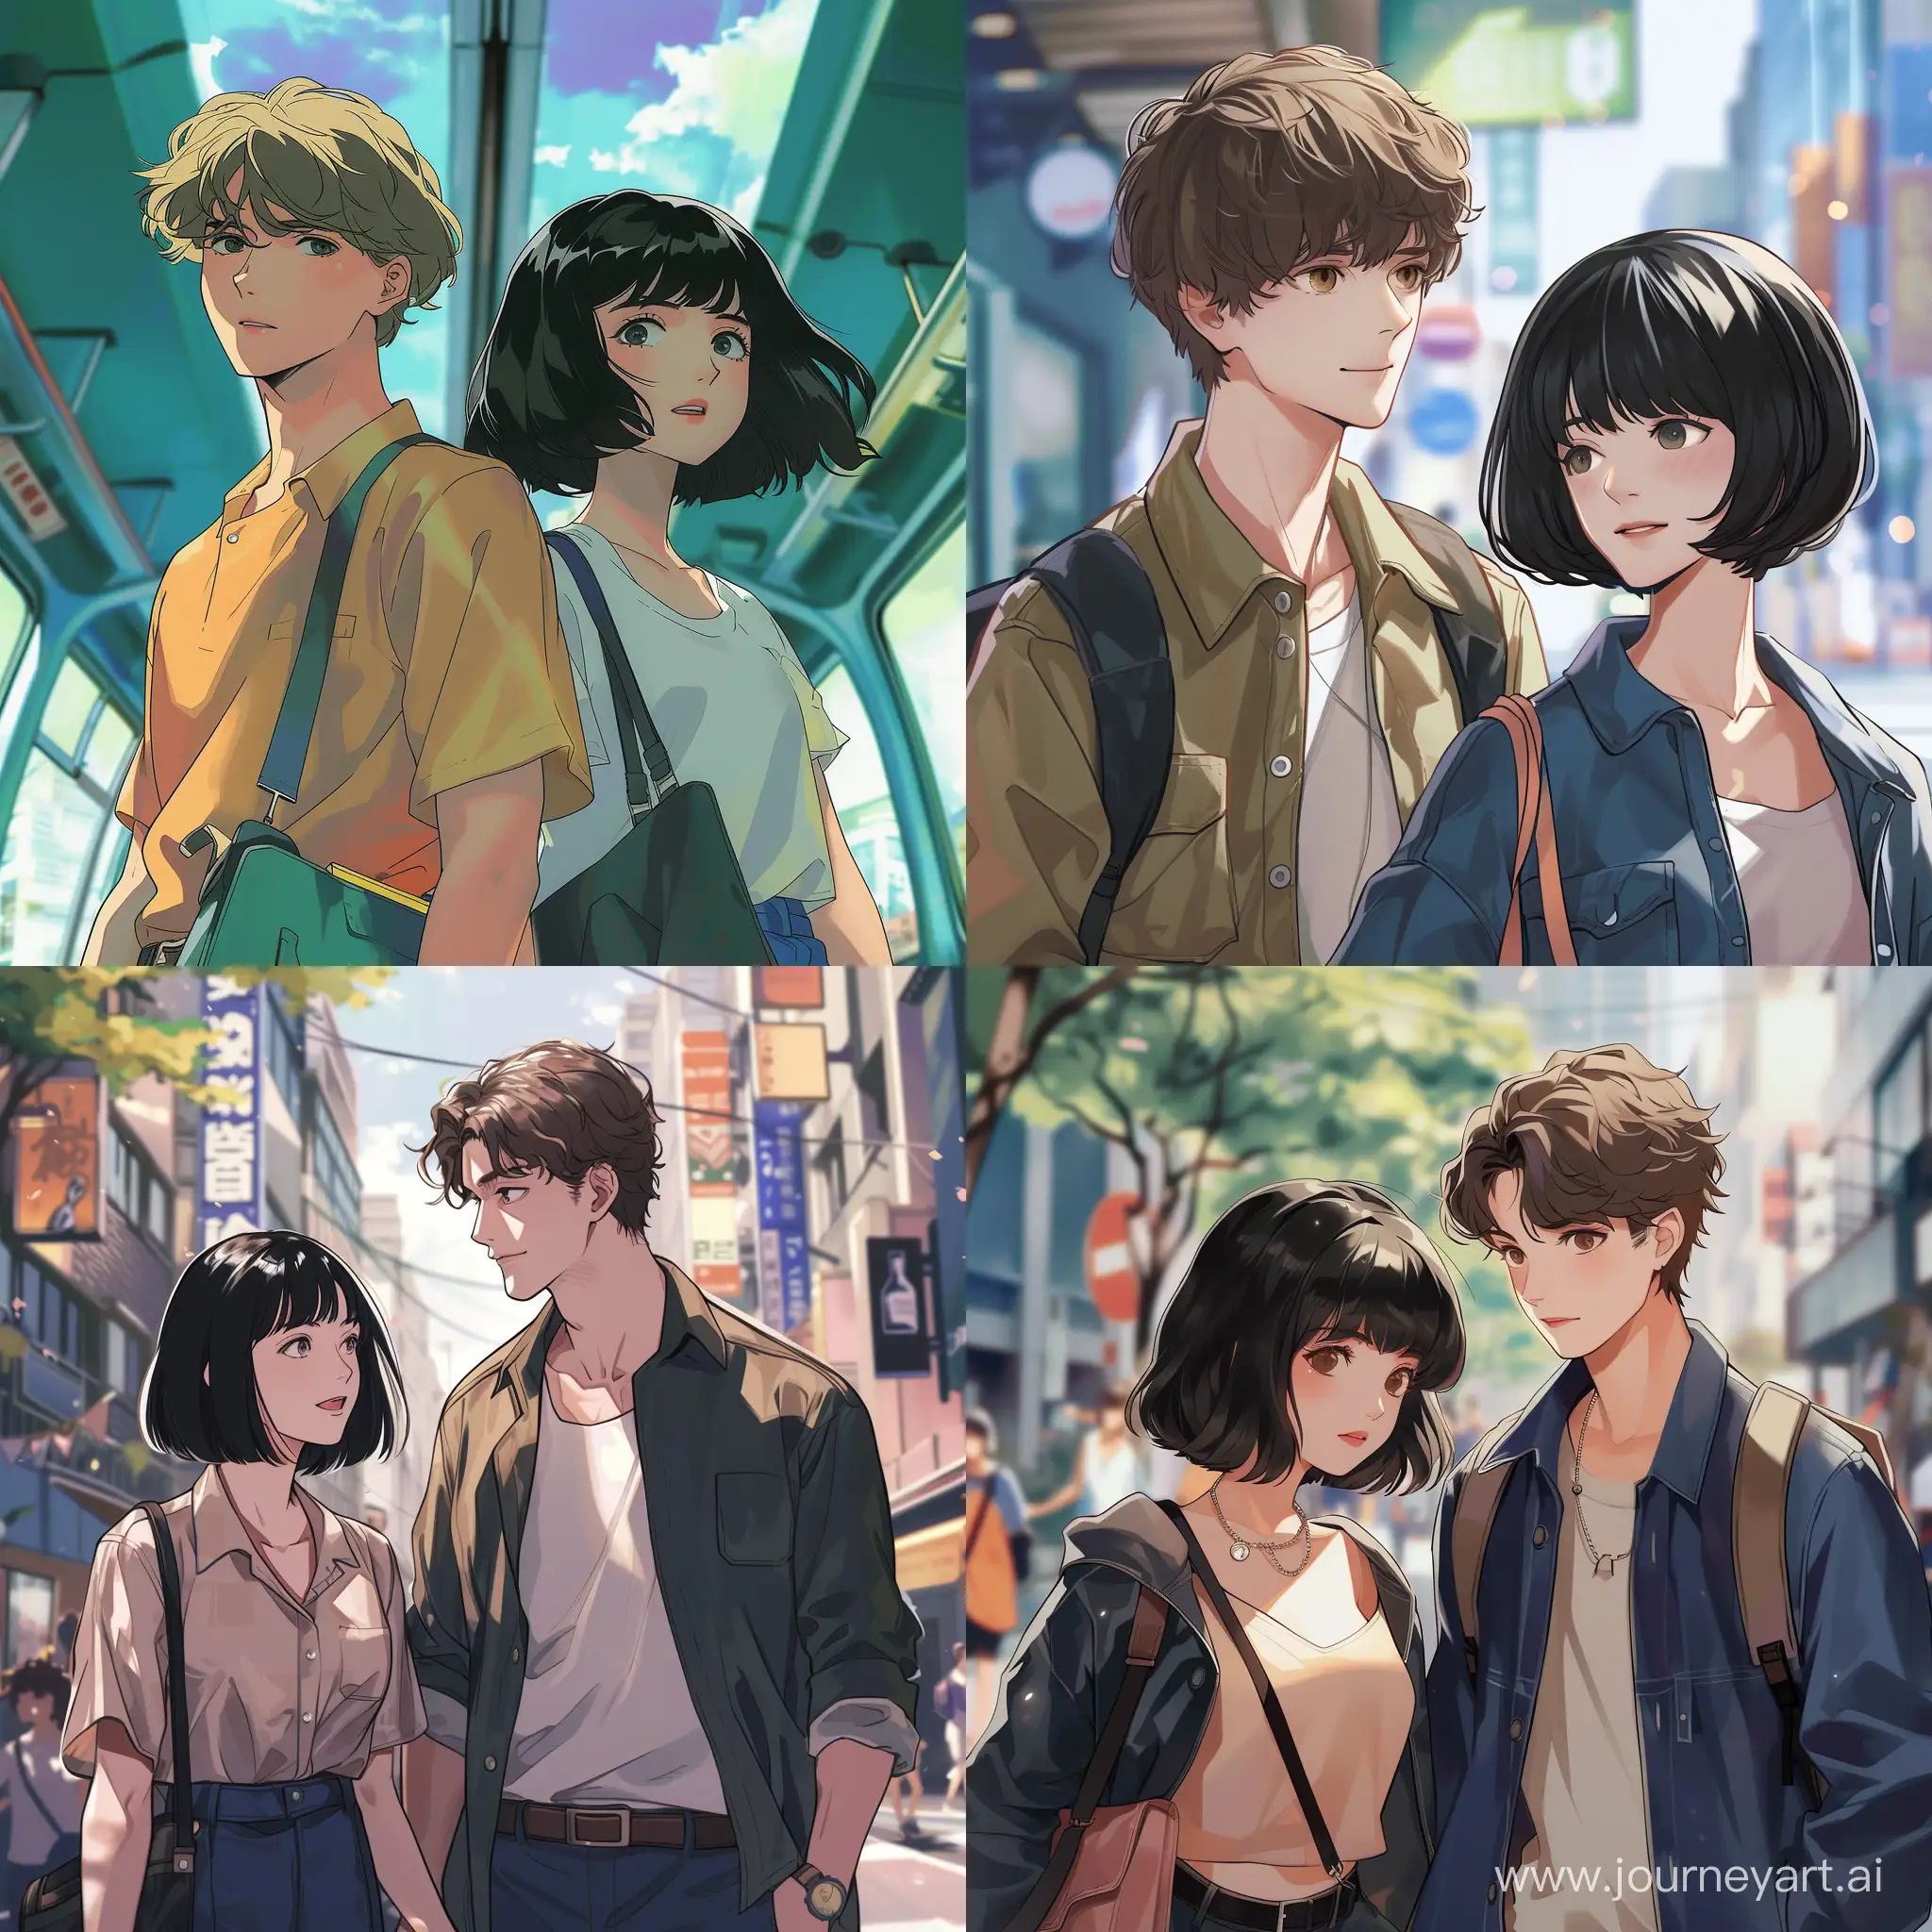 Brunette-Guy-and-Girl-Exploring-Anime-World-Together